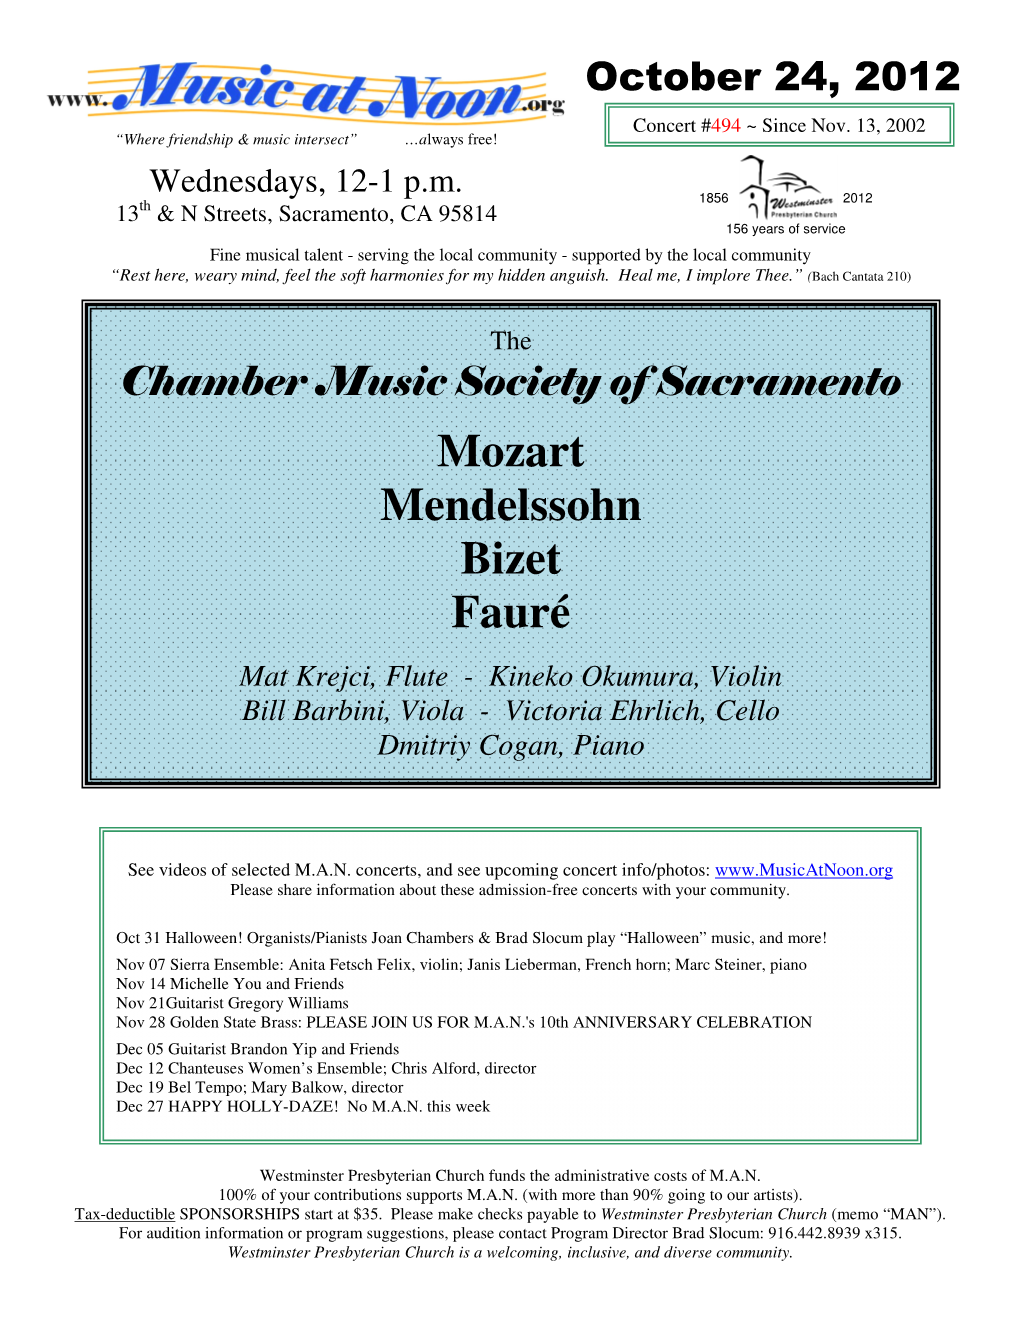 Mozart Mendelssohn Bizet Fauré